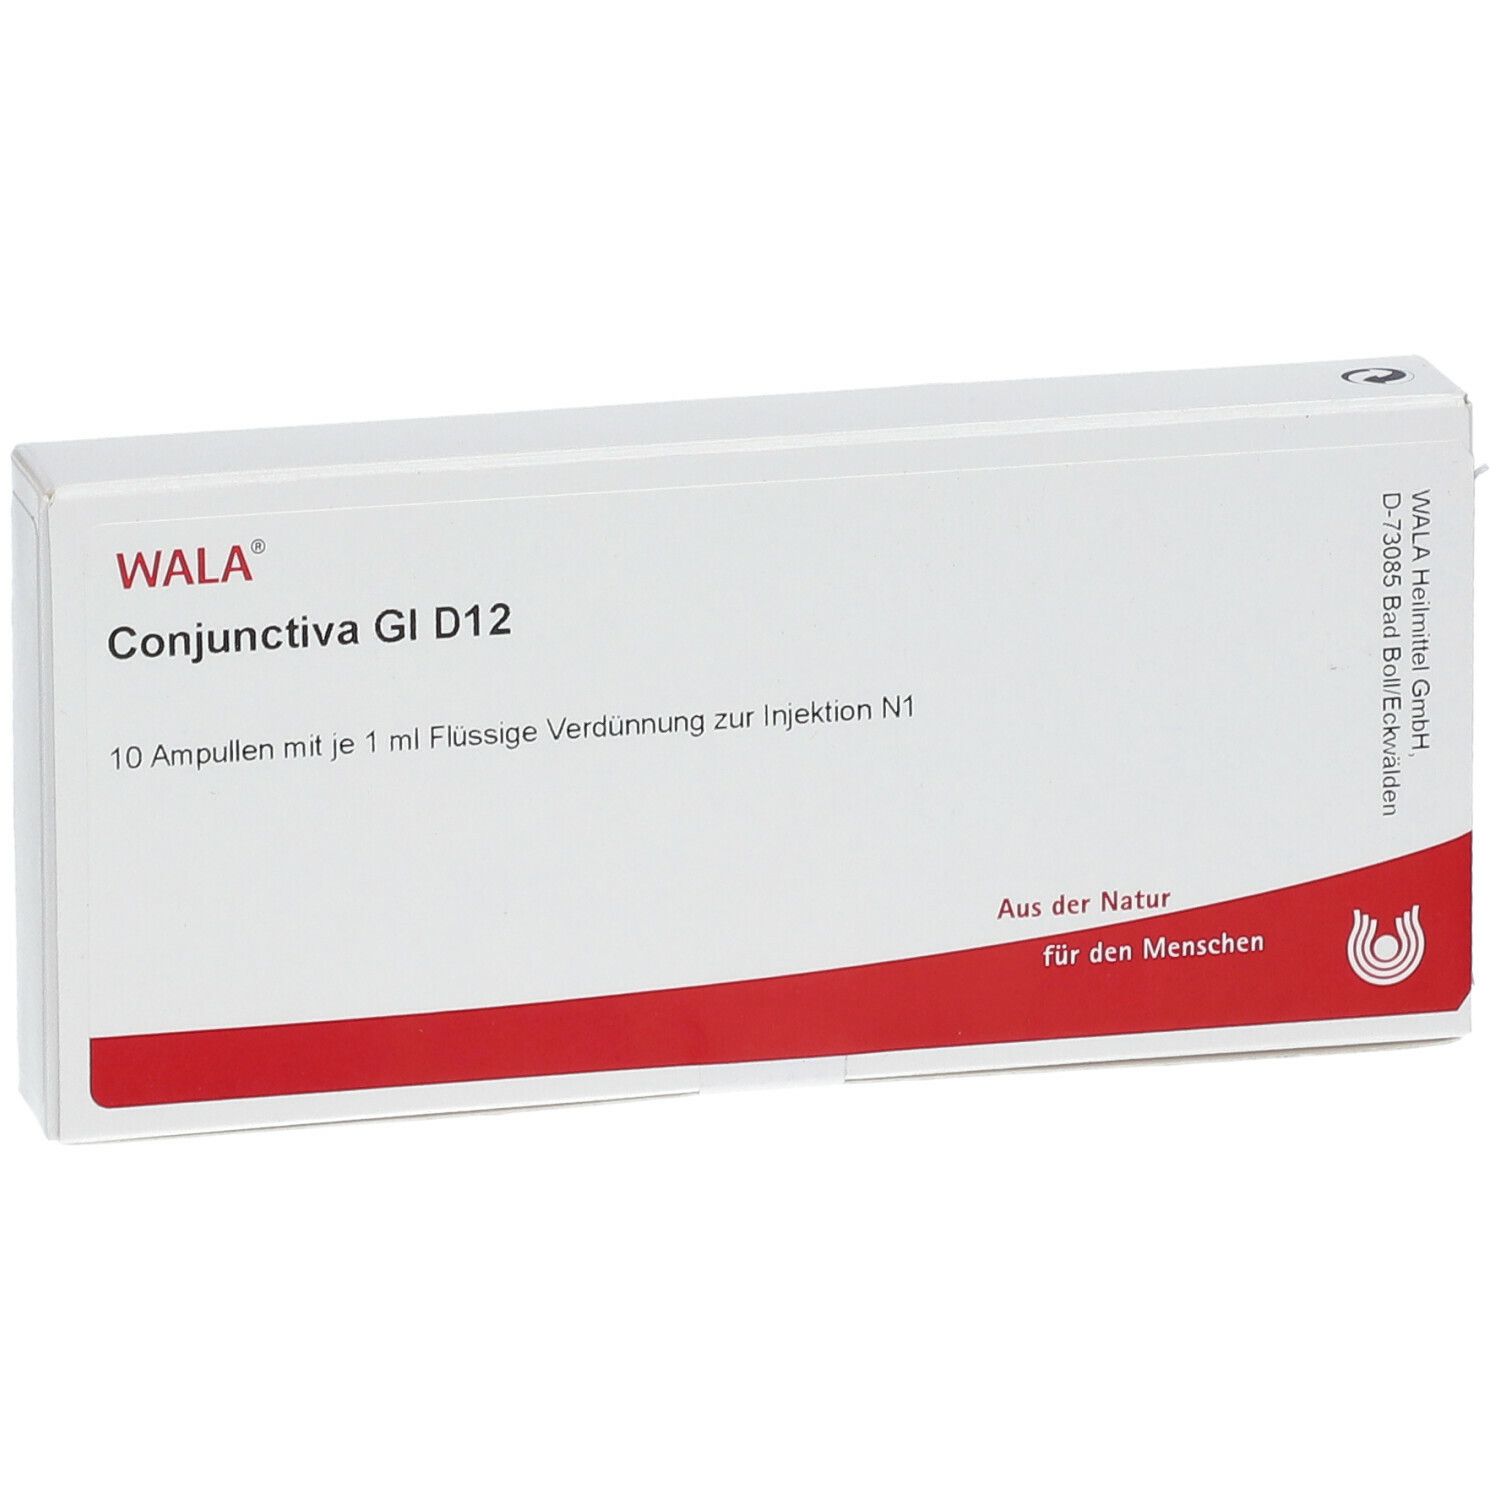 WALA® Conjunctiva Gl D 12